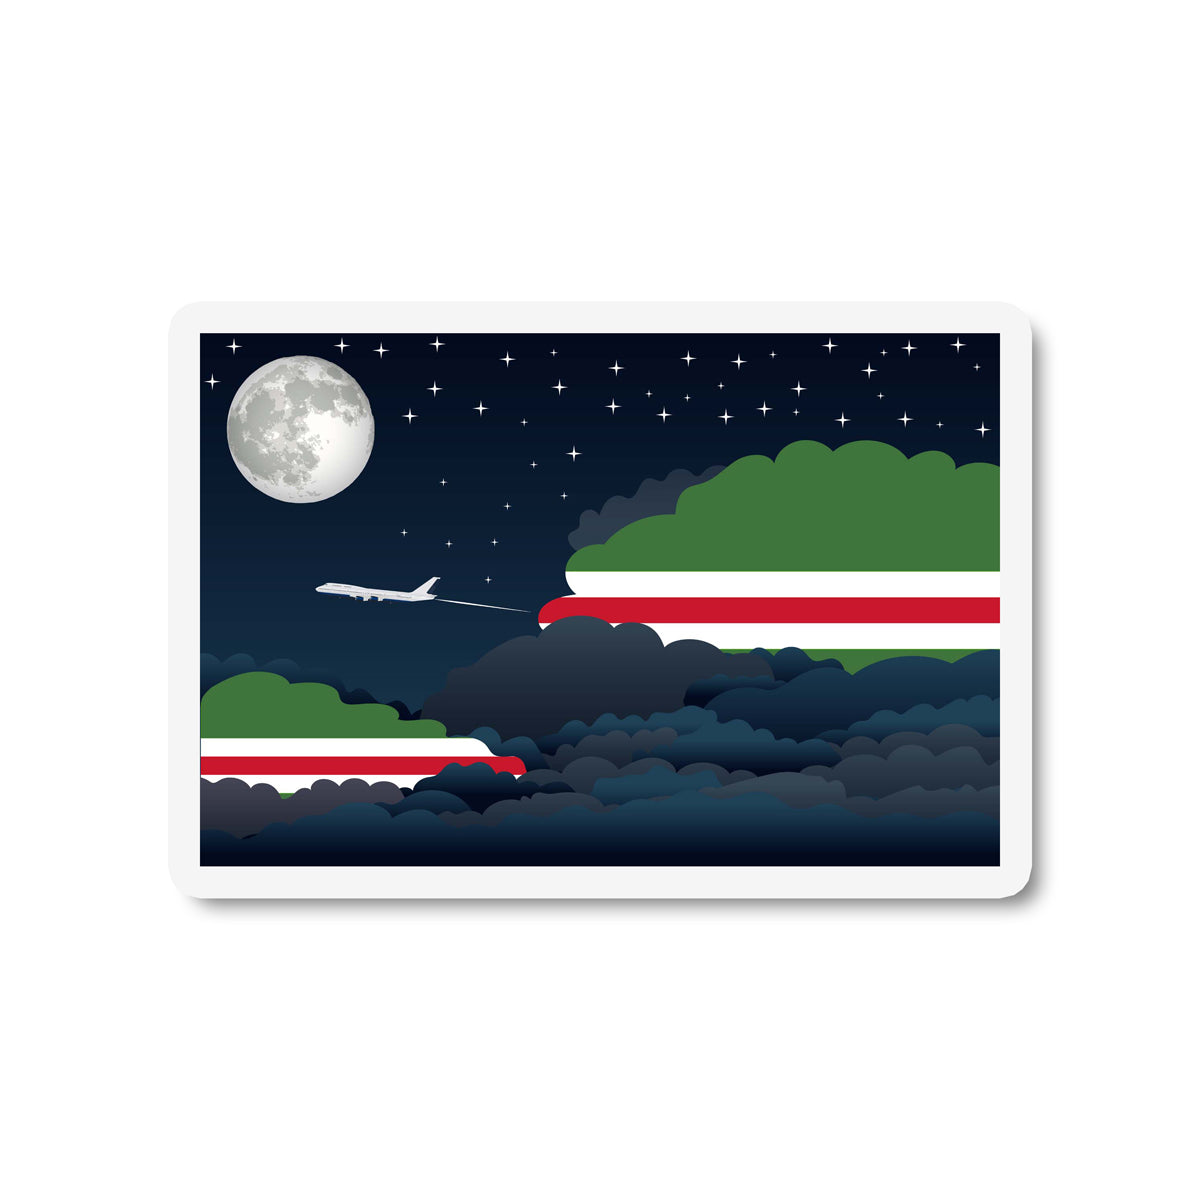 Chechen Republic of Ichkeria Flags Night Clouds Sticker